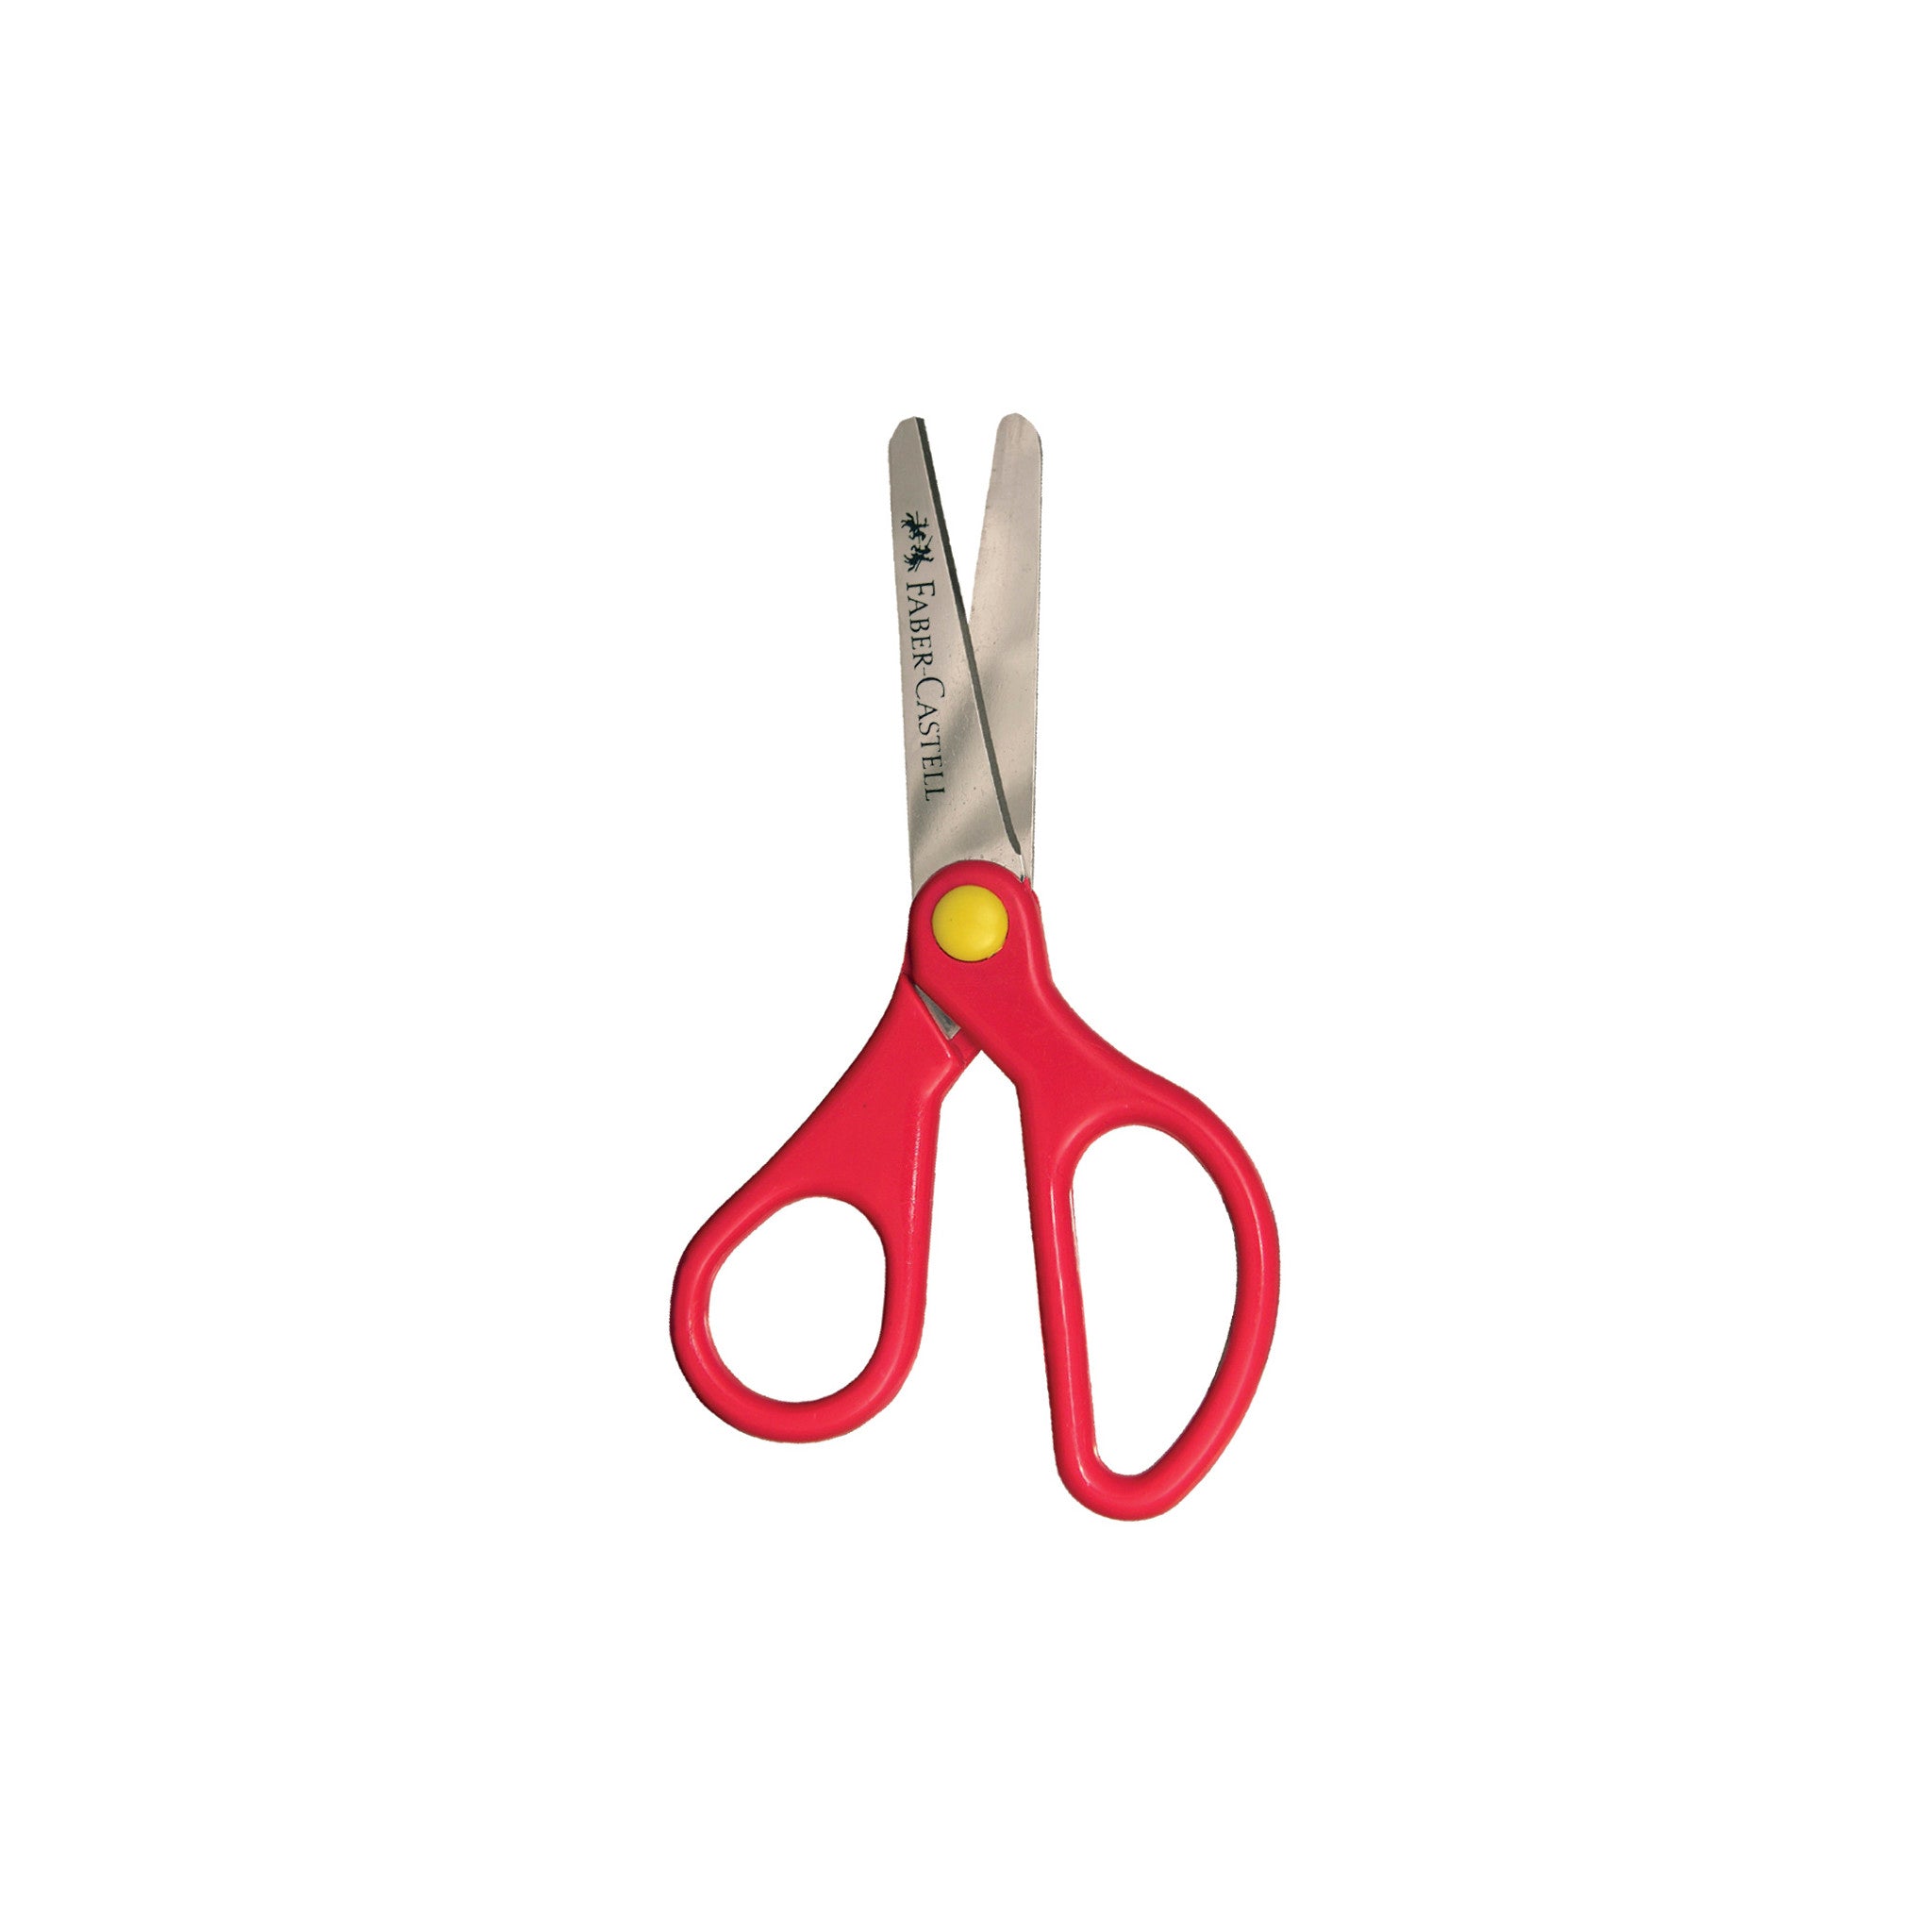 Mini Kids scissors, Child scissors, scissors for school, boys scissors  Girls scissors, Safety scissors suitable for kids ages 4-8